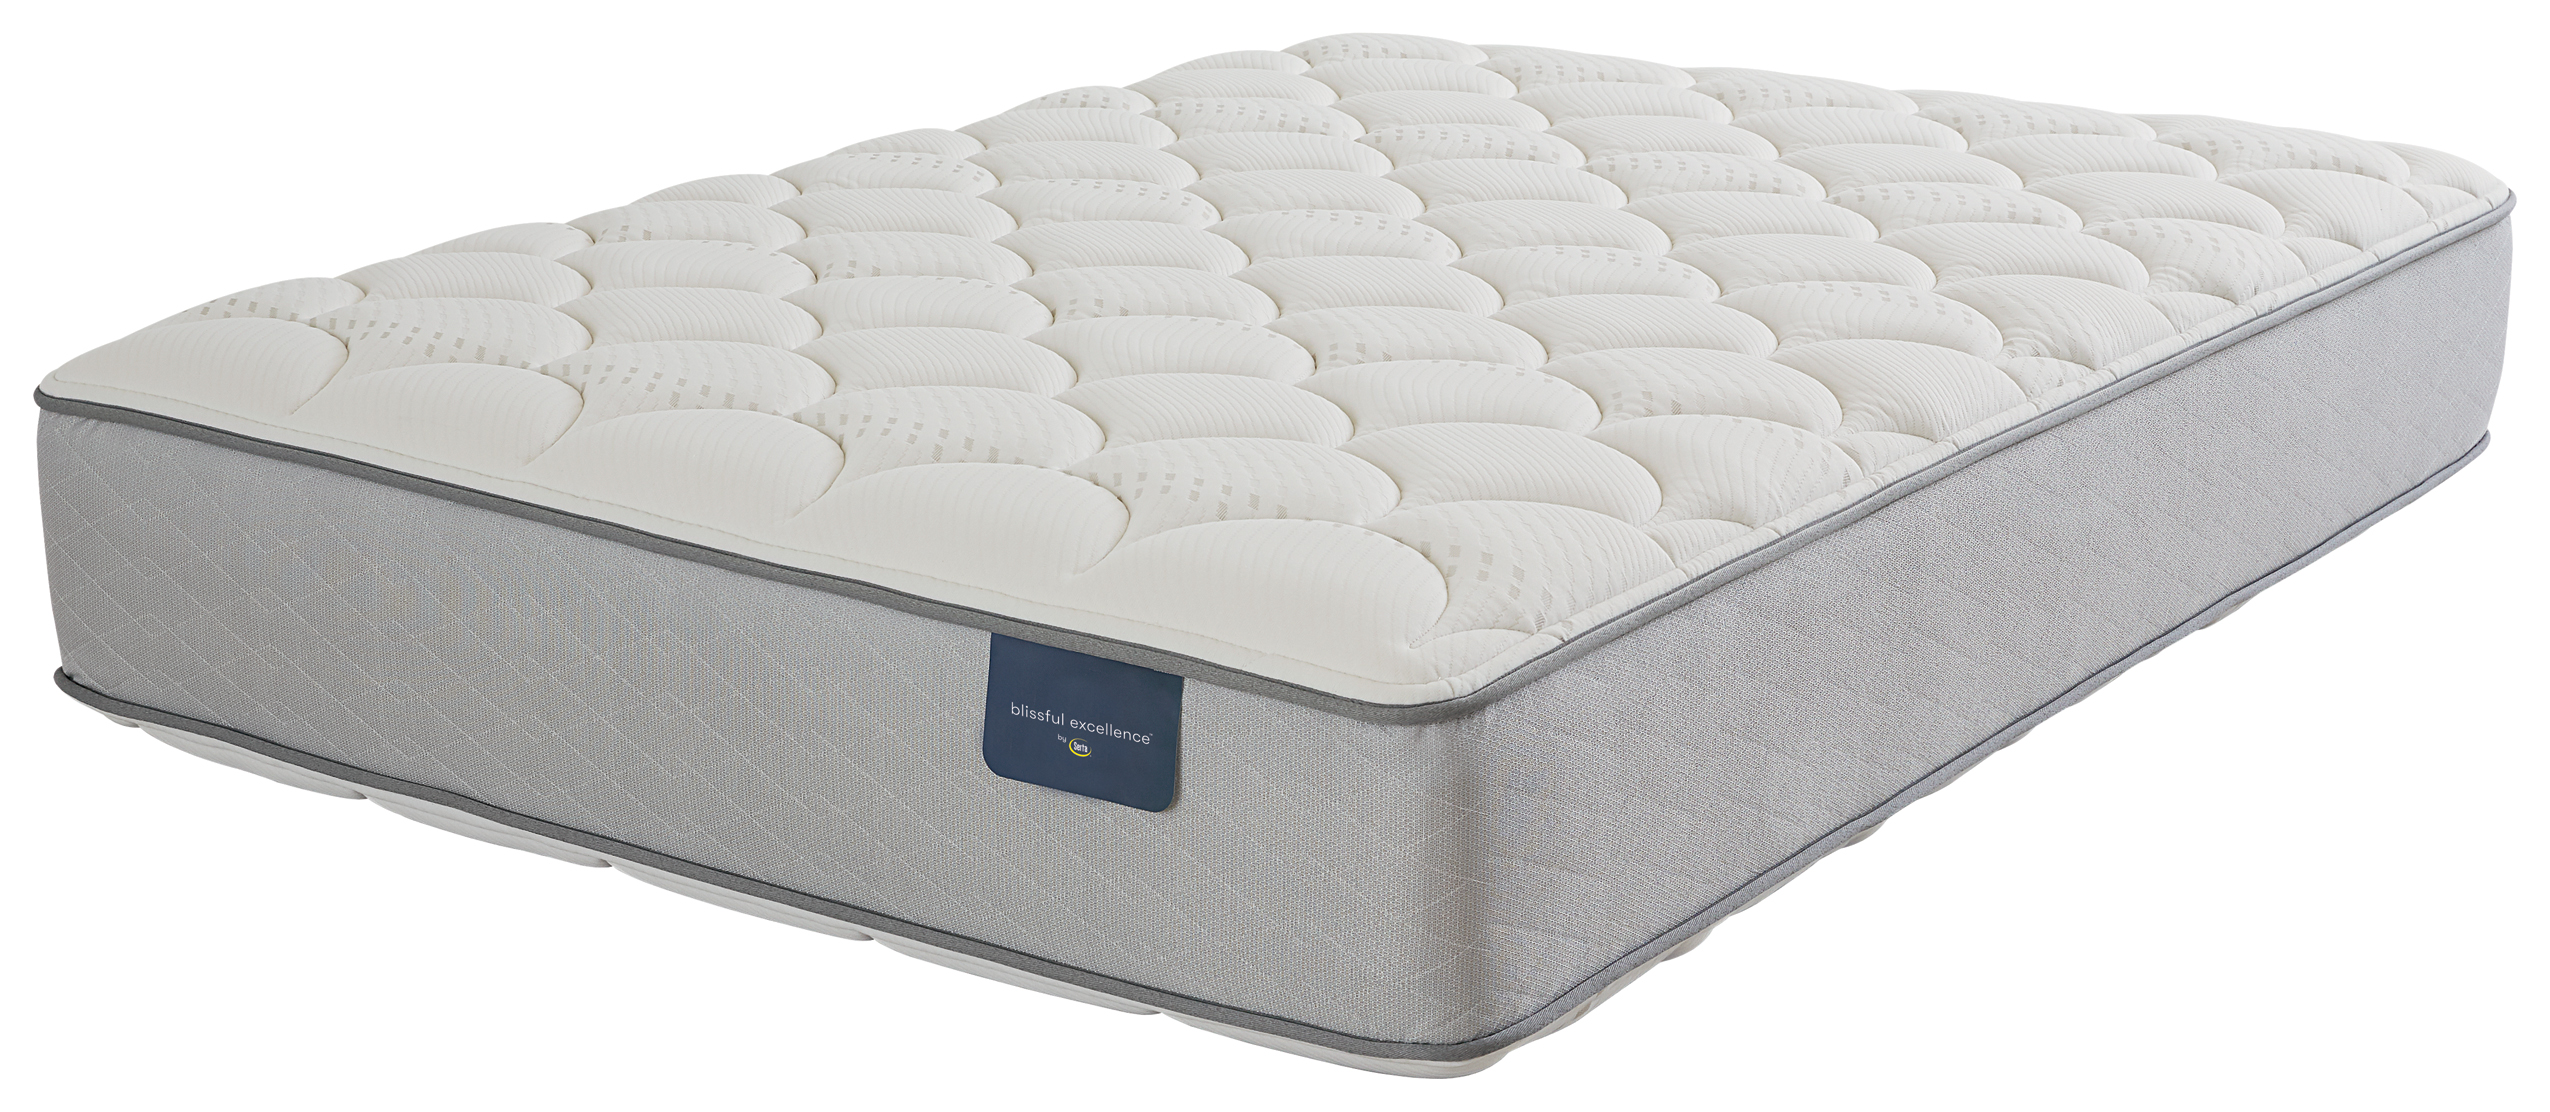 serta perfect sleeper concierge suite plush hospitality mattress